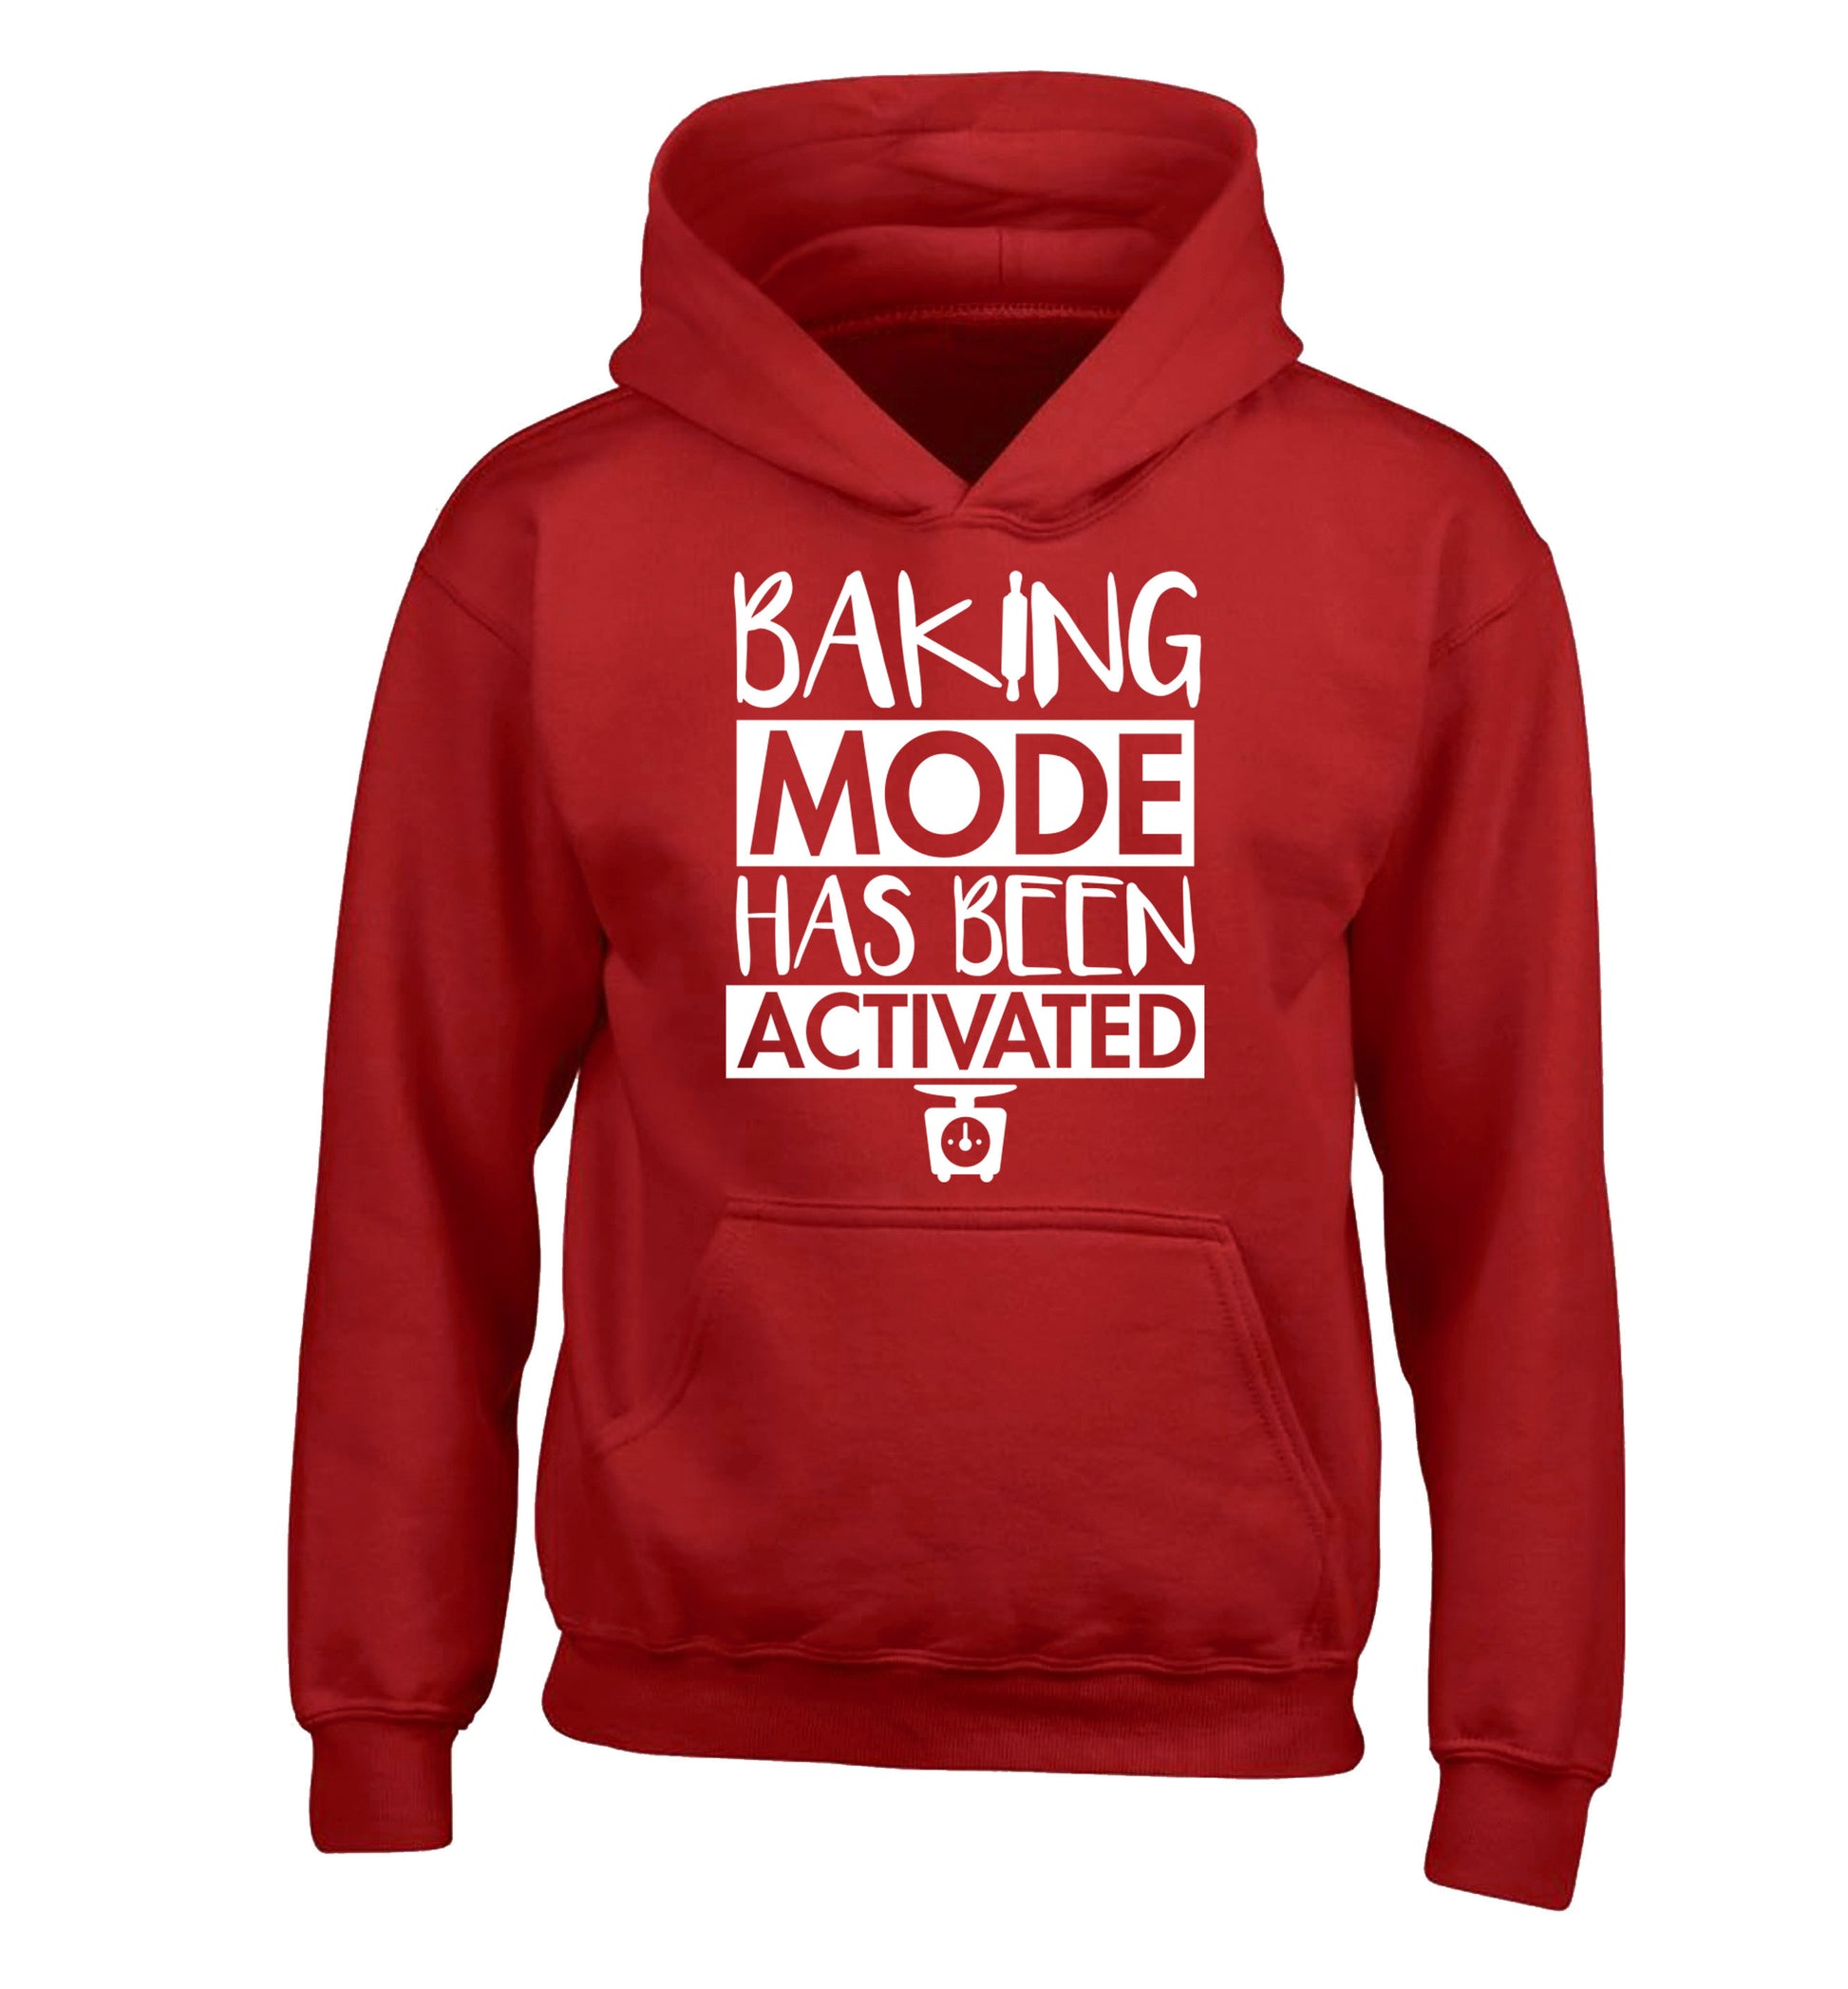 Baking mode has been activated children's red hoodie 12-14 Years